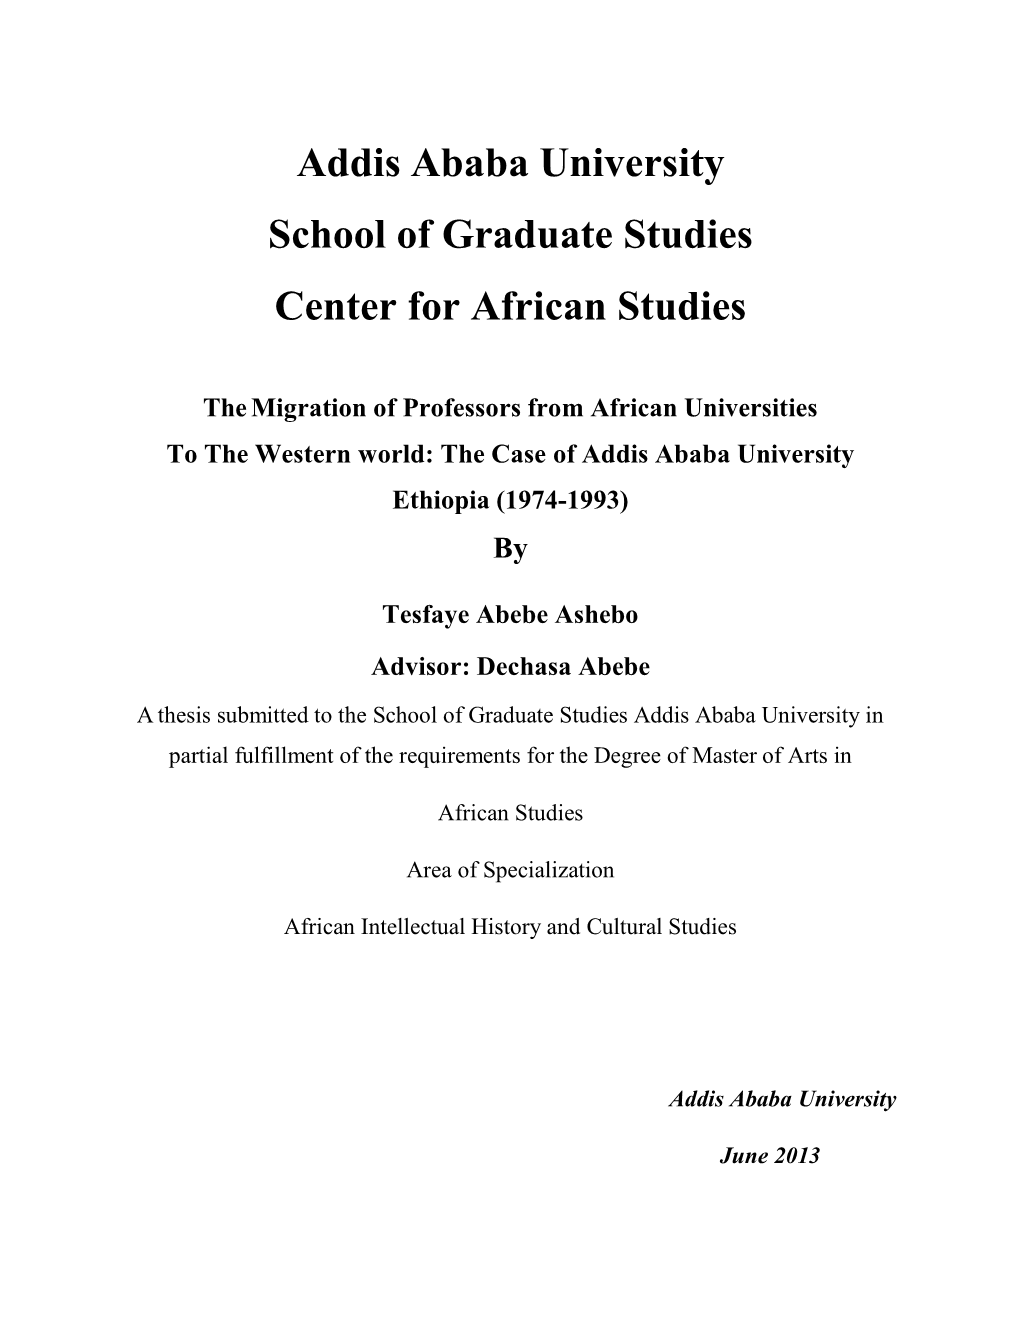 Addis Ababa University School of Graduate Studies Center for African Studies